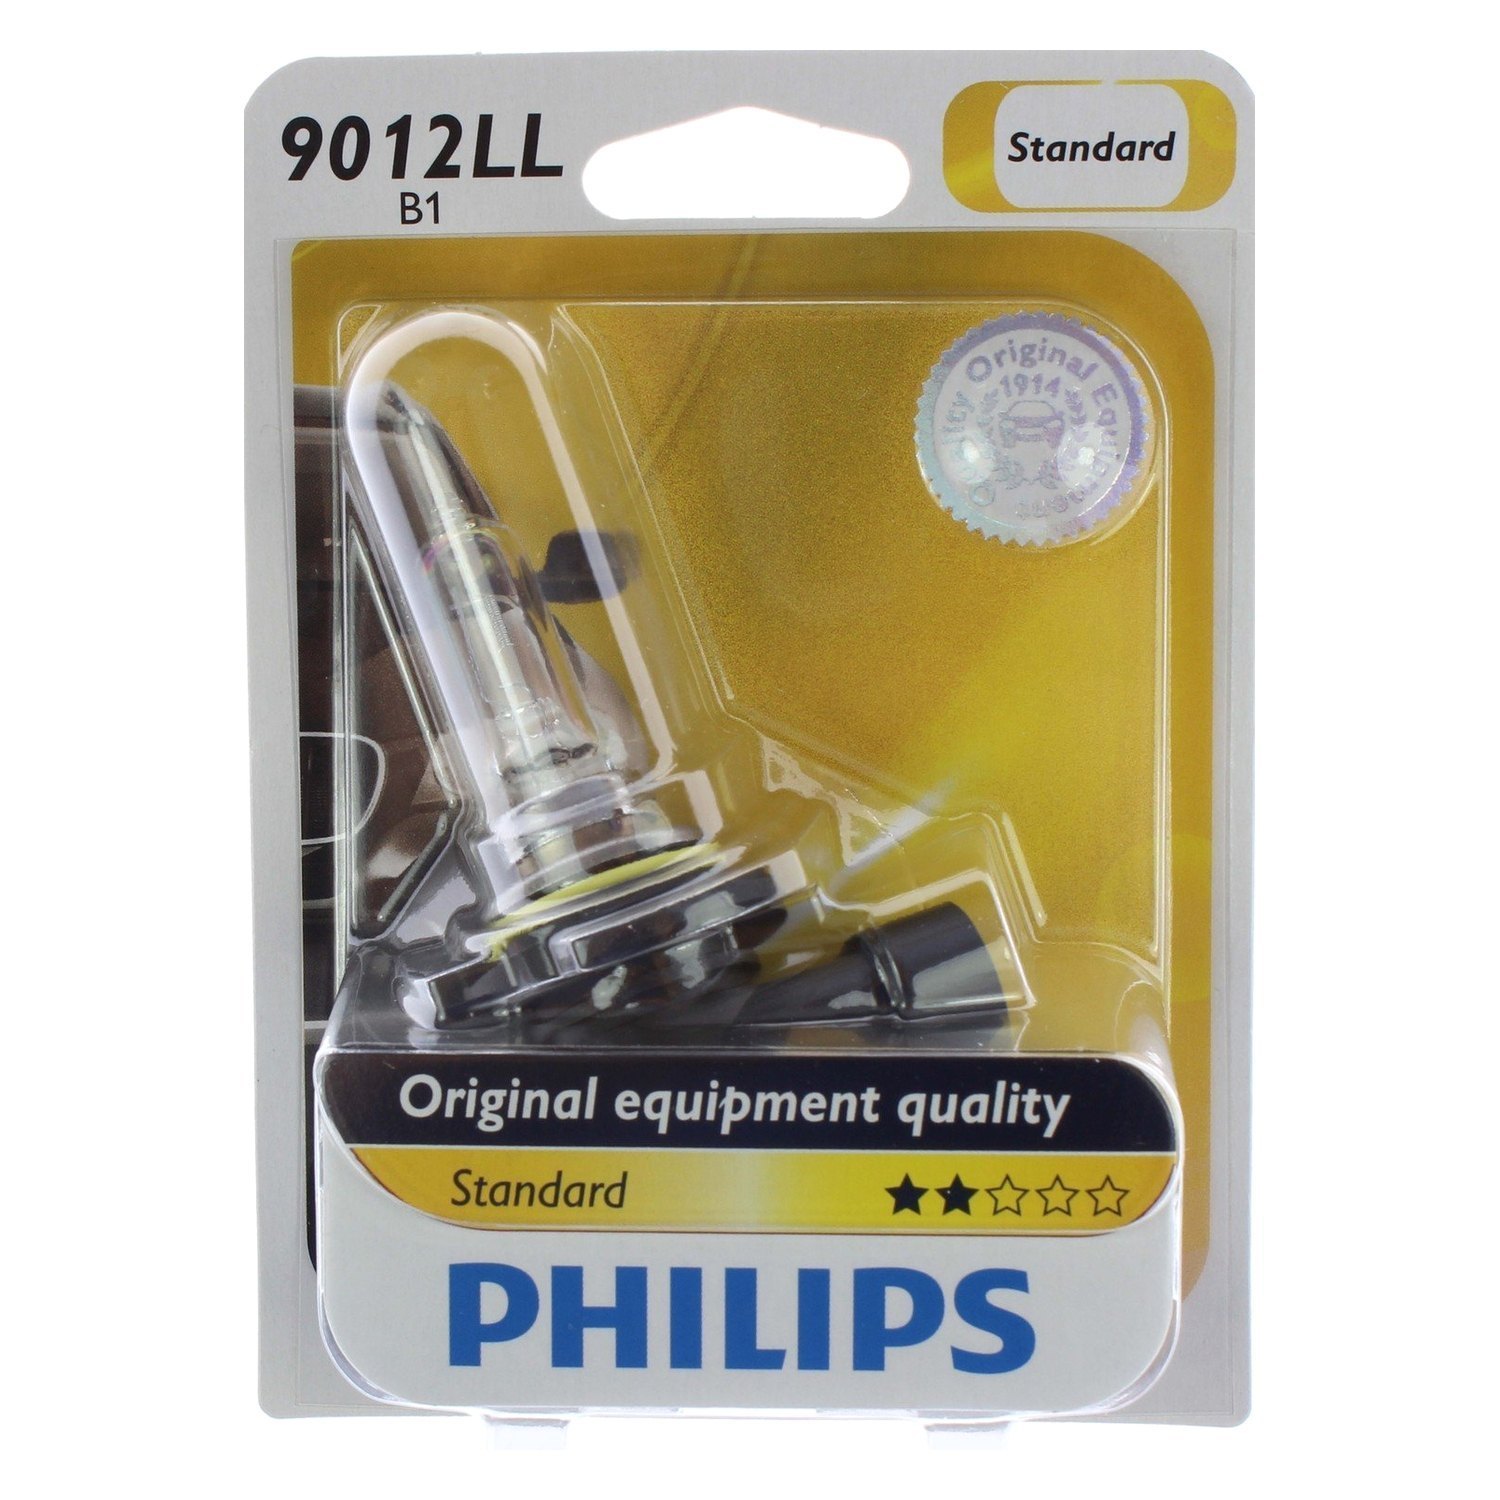 Фара филипс. 9012llc1 Philips. Автолампа Philips p-9012ll. Лампы Филипс Лонг Лайт 24 вольта. Фара Philips.